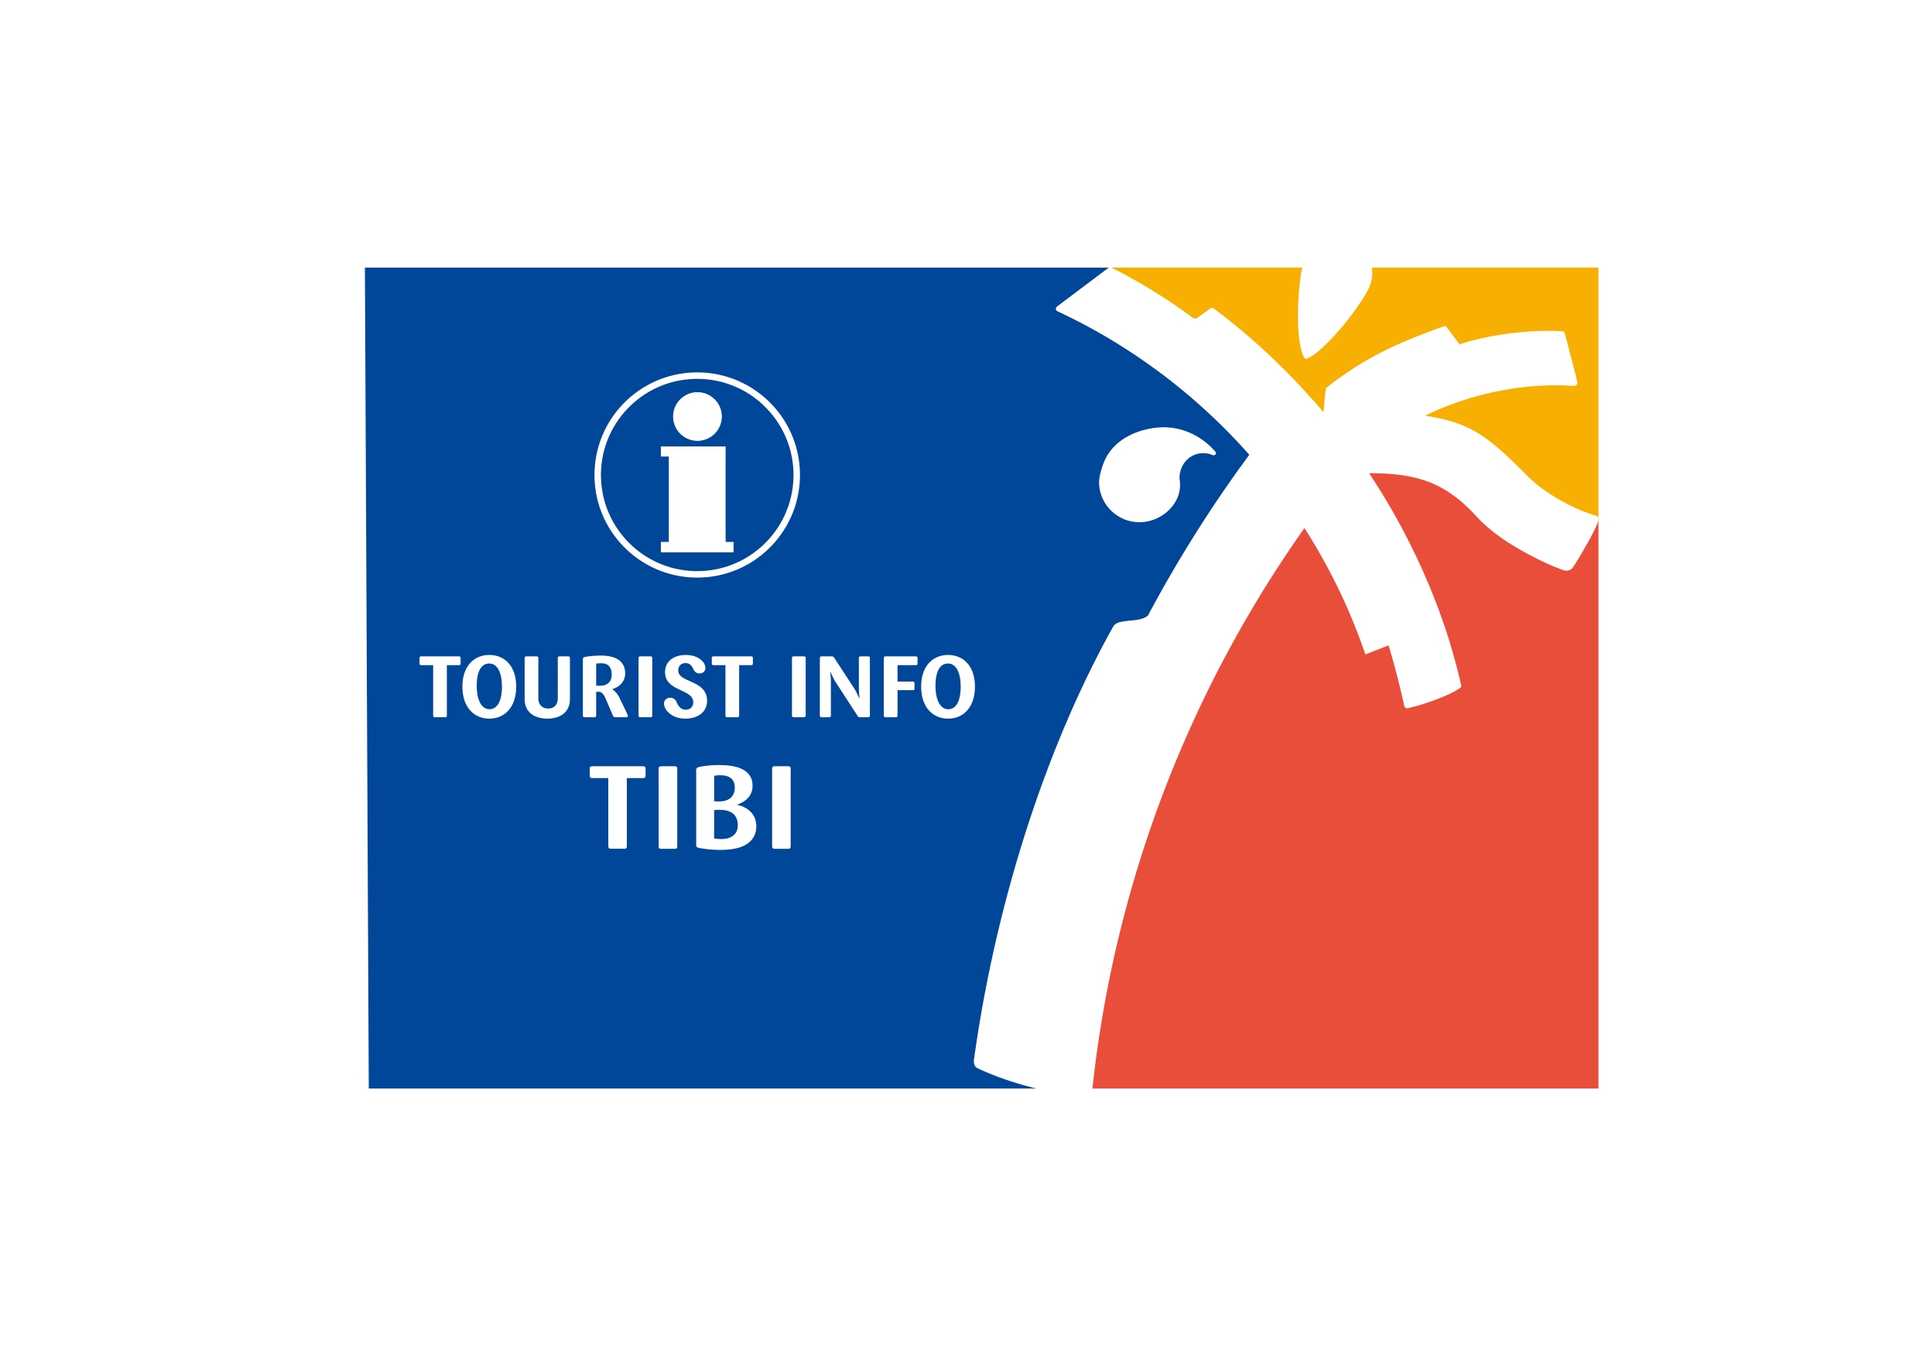 TOURIST INFO TIBI